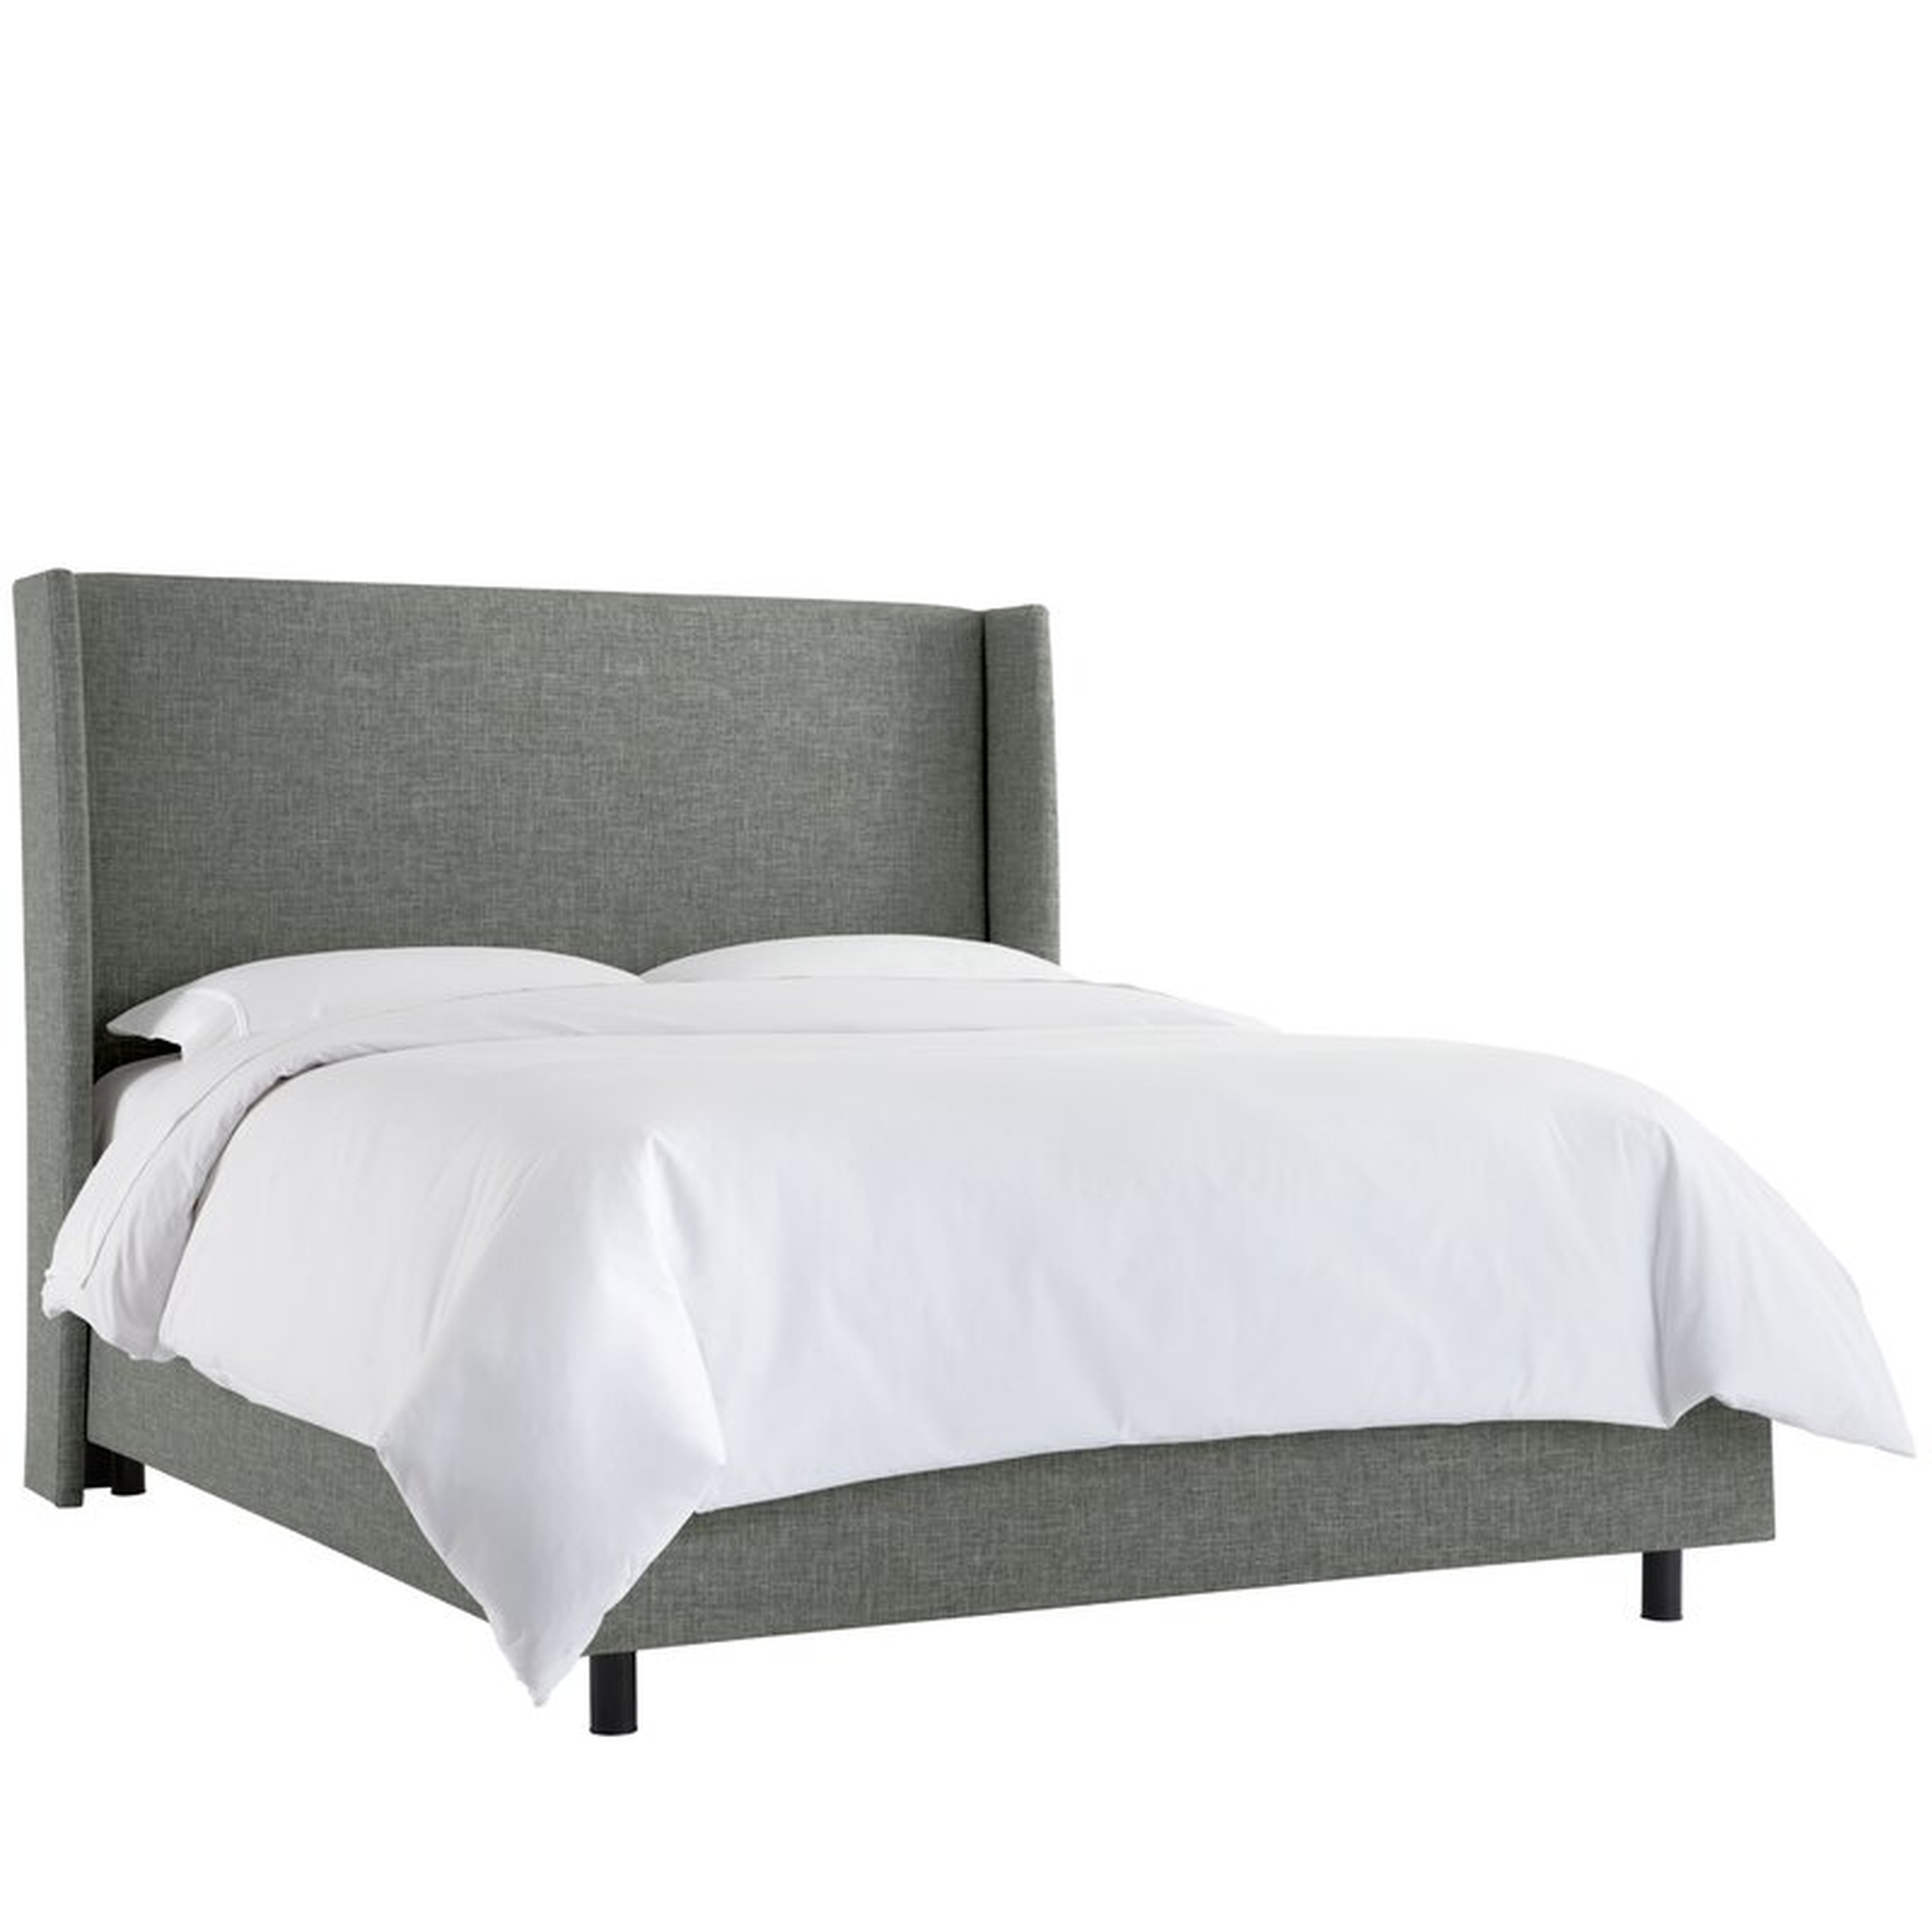 Alrai Upholstered Standard Bed - King, Charcoal - Wayfair